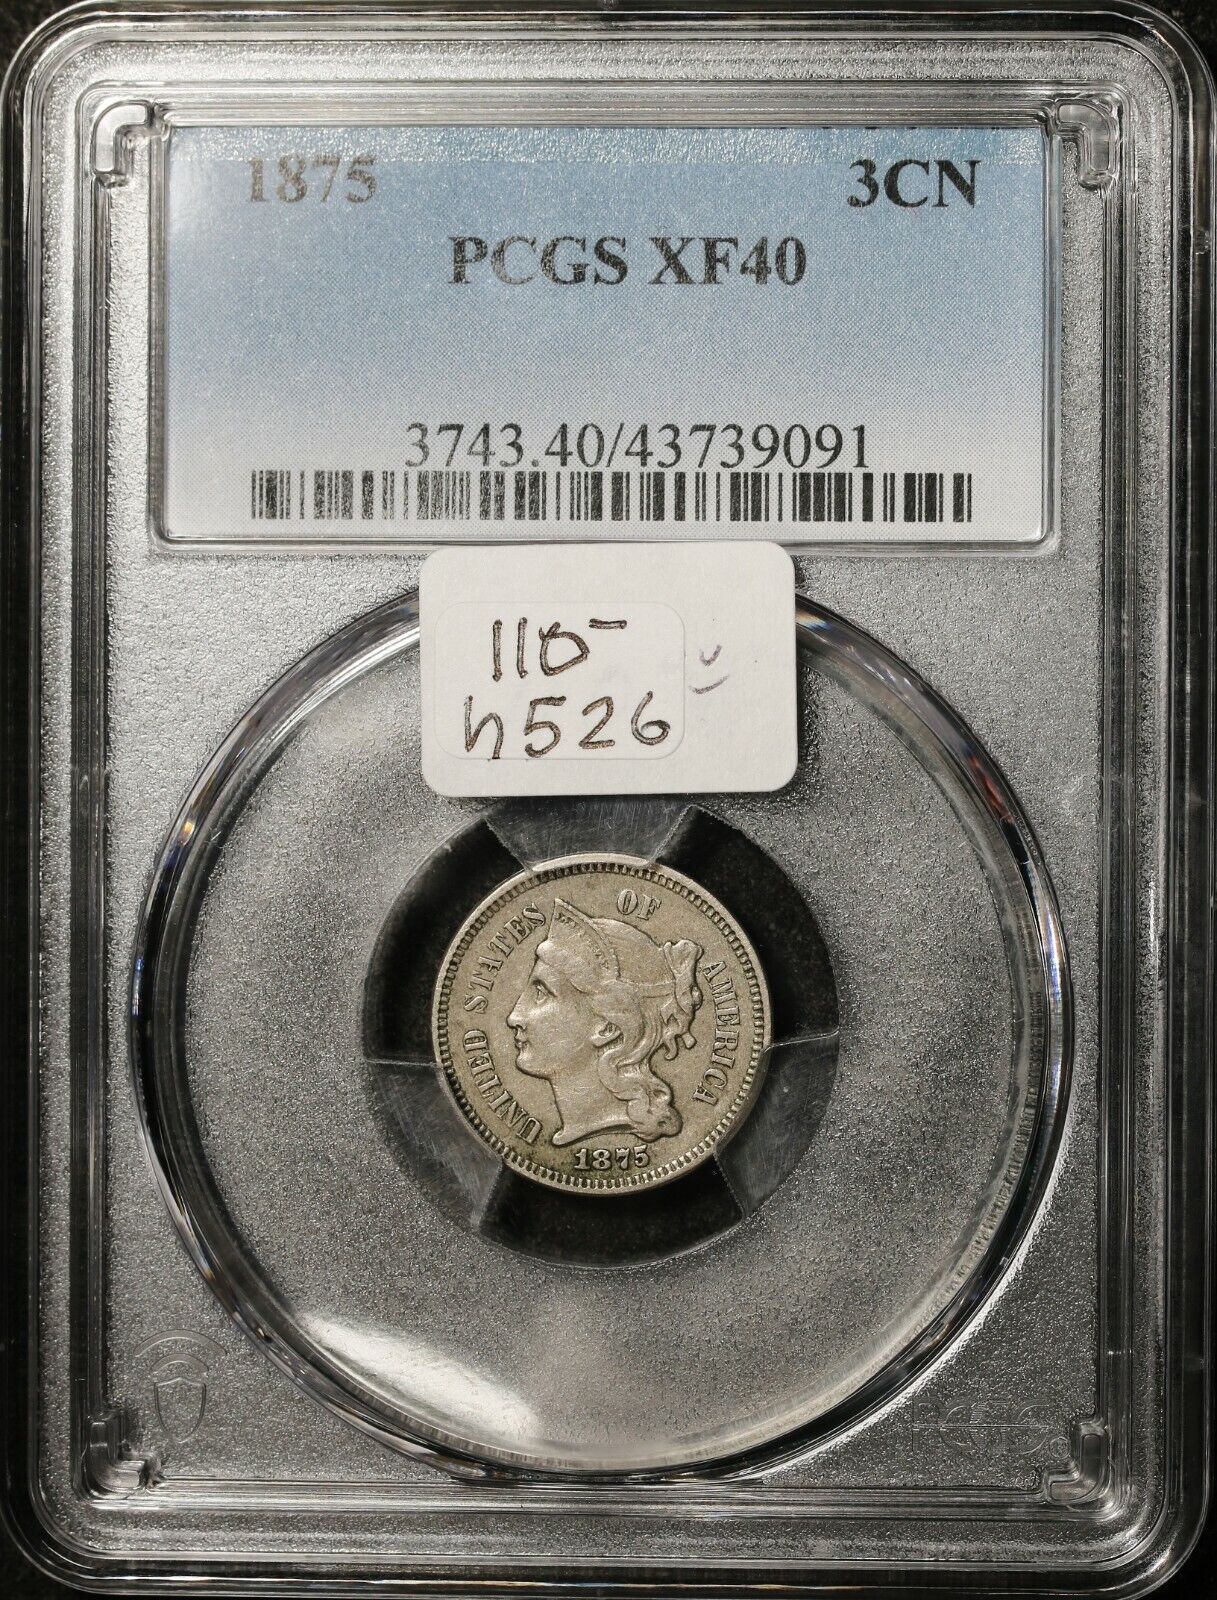 1875 Three Cent Nickel.  In PCGS Holder.  XF40.   h526